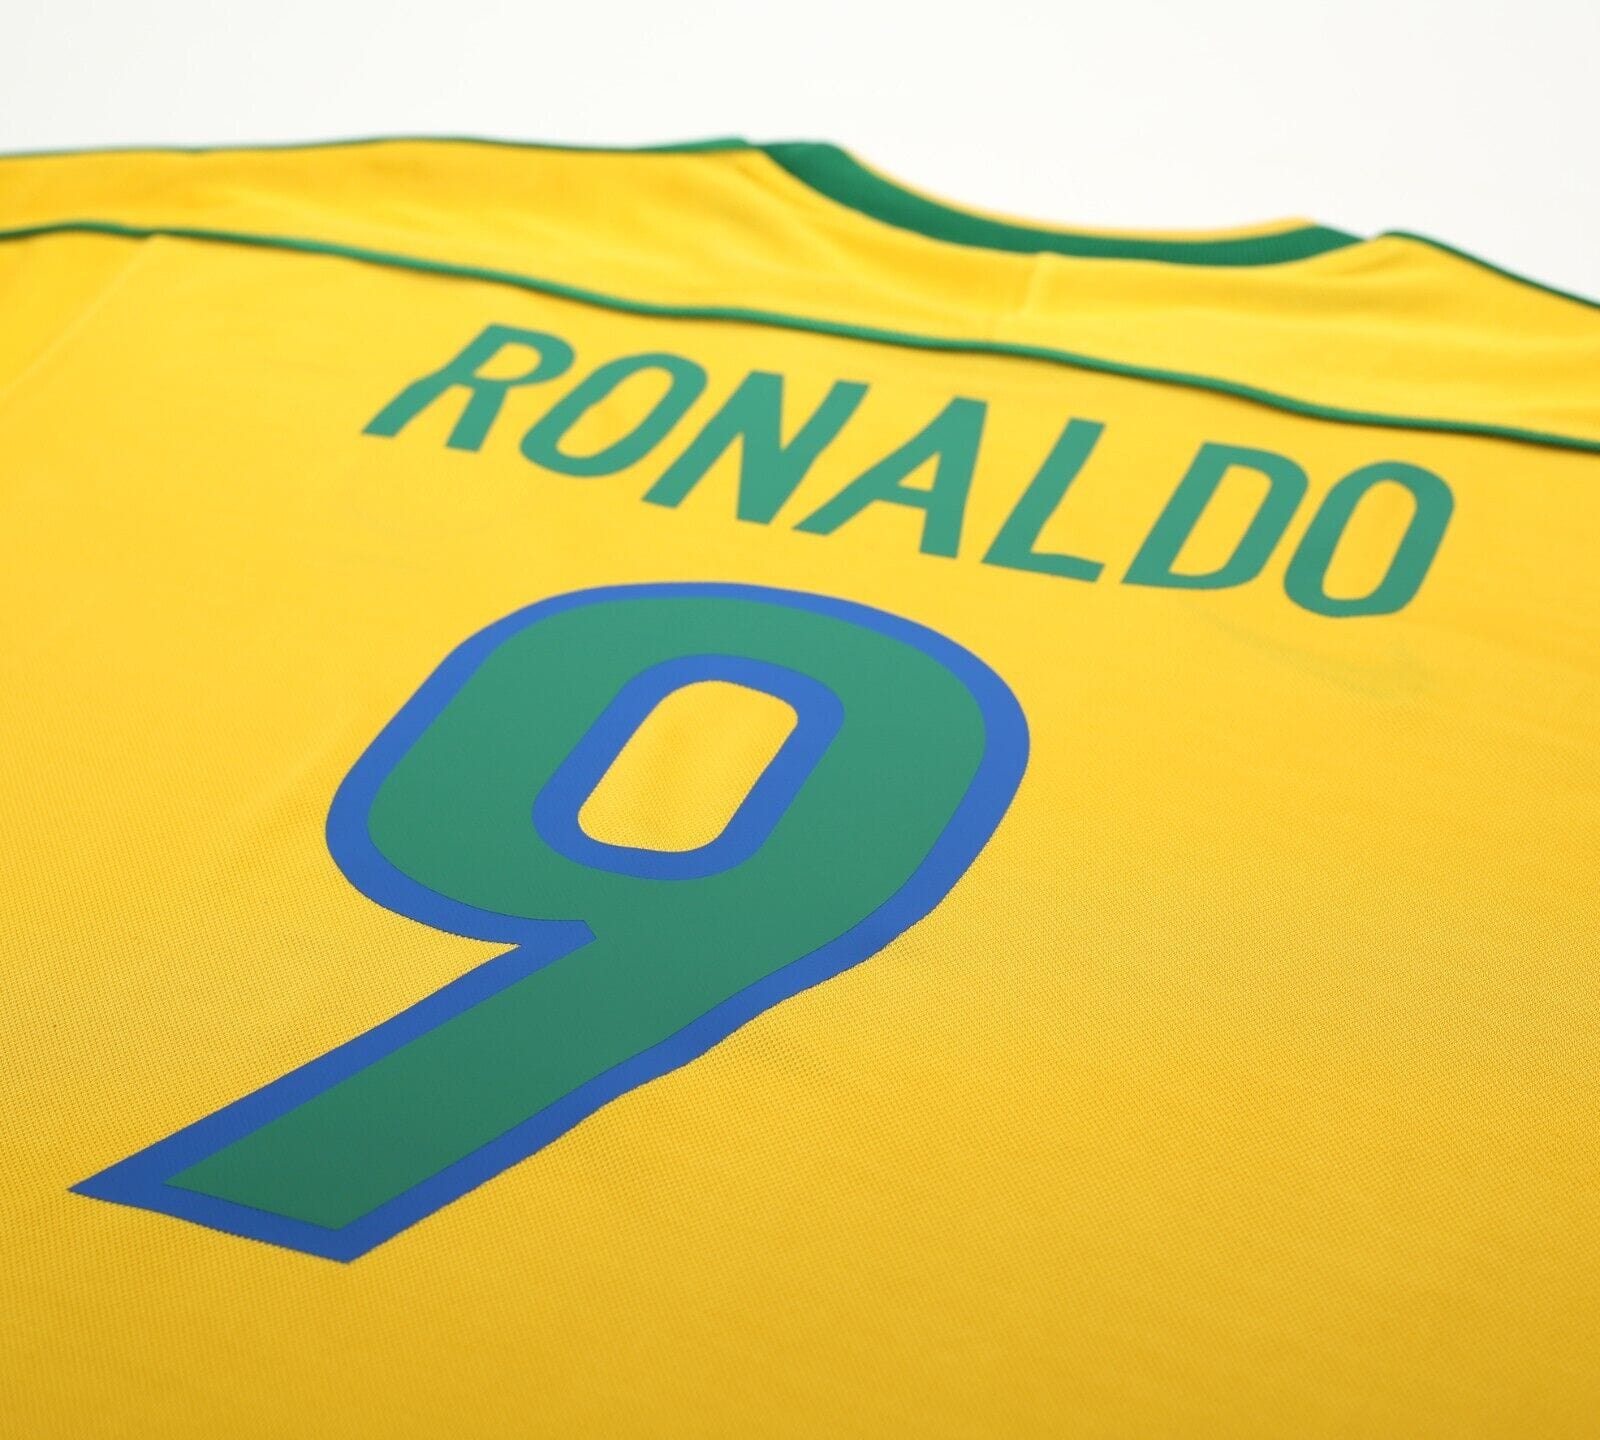 1998/00 RONALDO #9 Brazil Vintage Nike WC 98 Home Football Shirt (M)